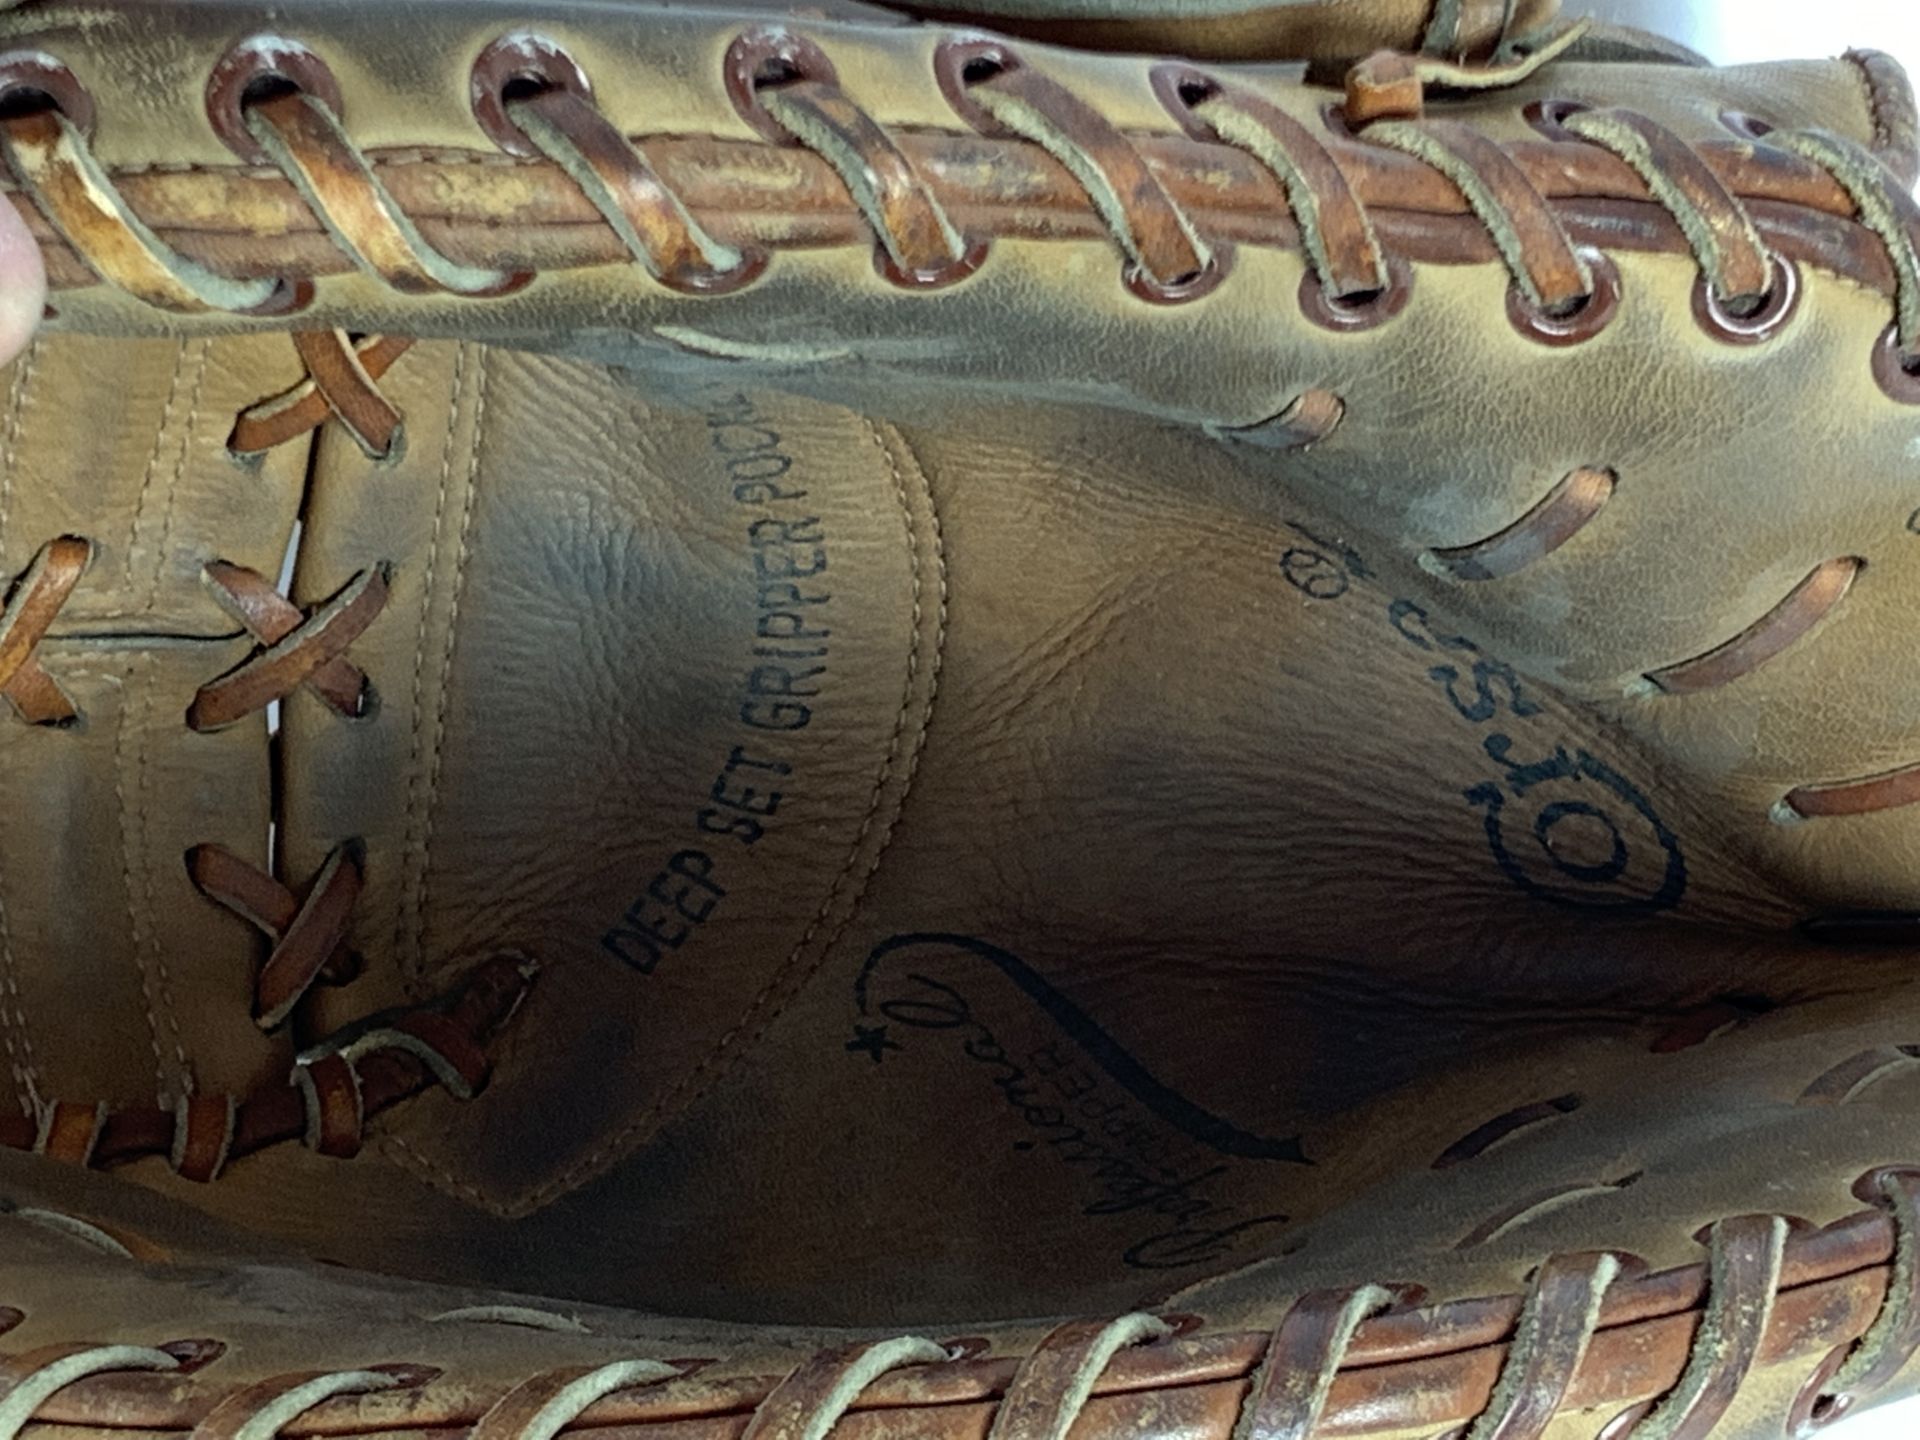 Vintage Baseball Glove and 2 Balls, Sports Memorabilia, Corsair Genuine Top Grain Leather - Image 5 of 6